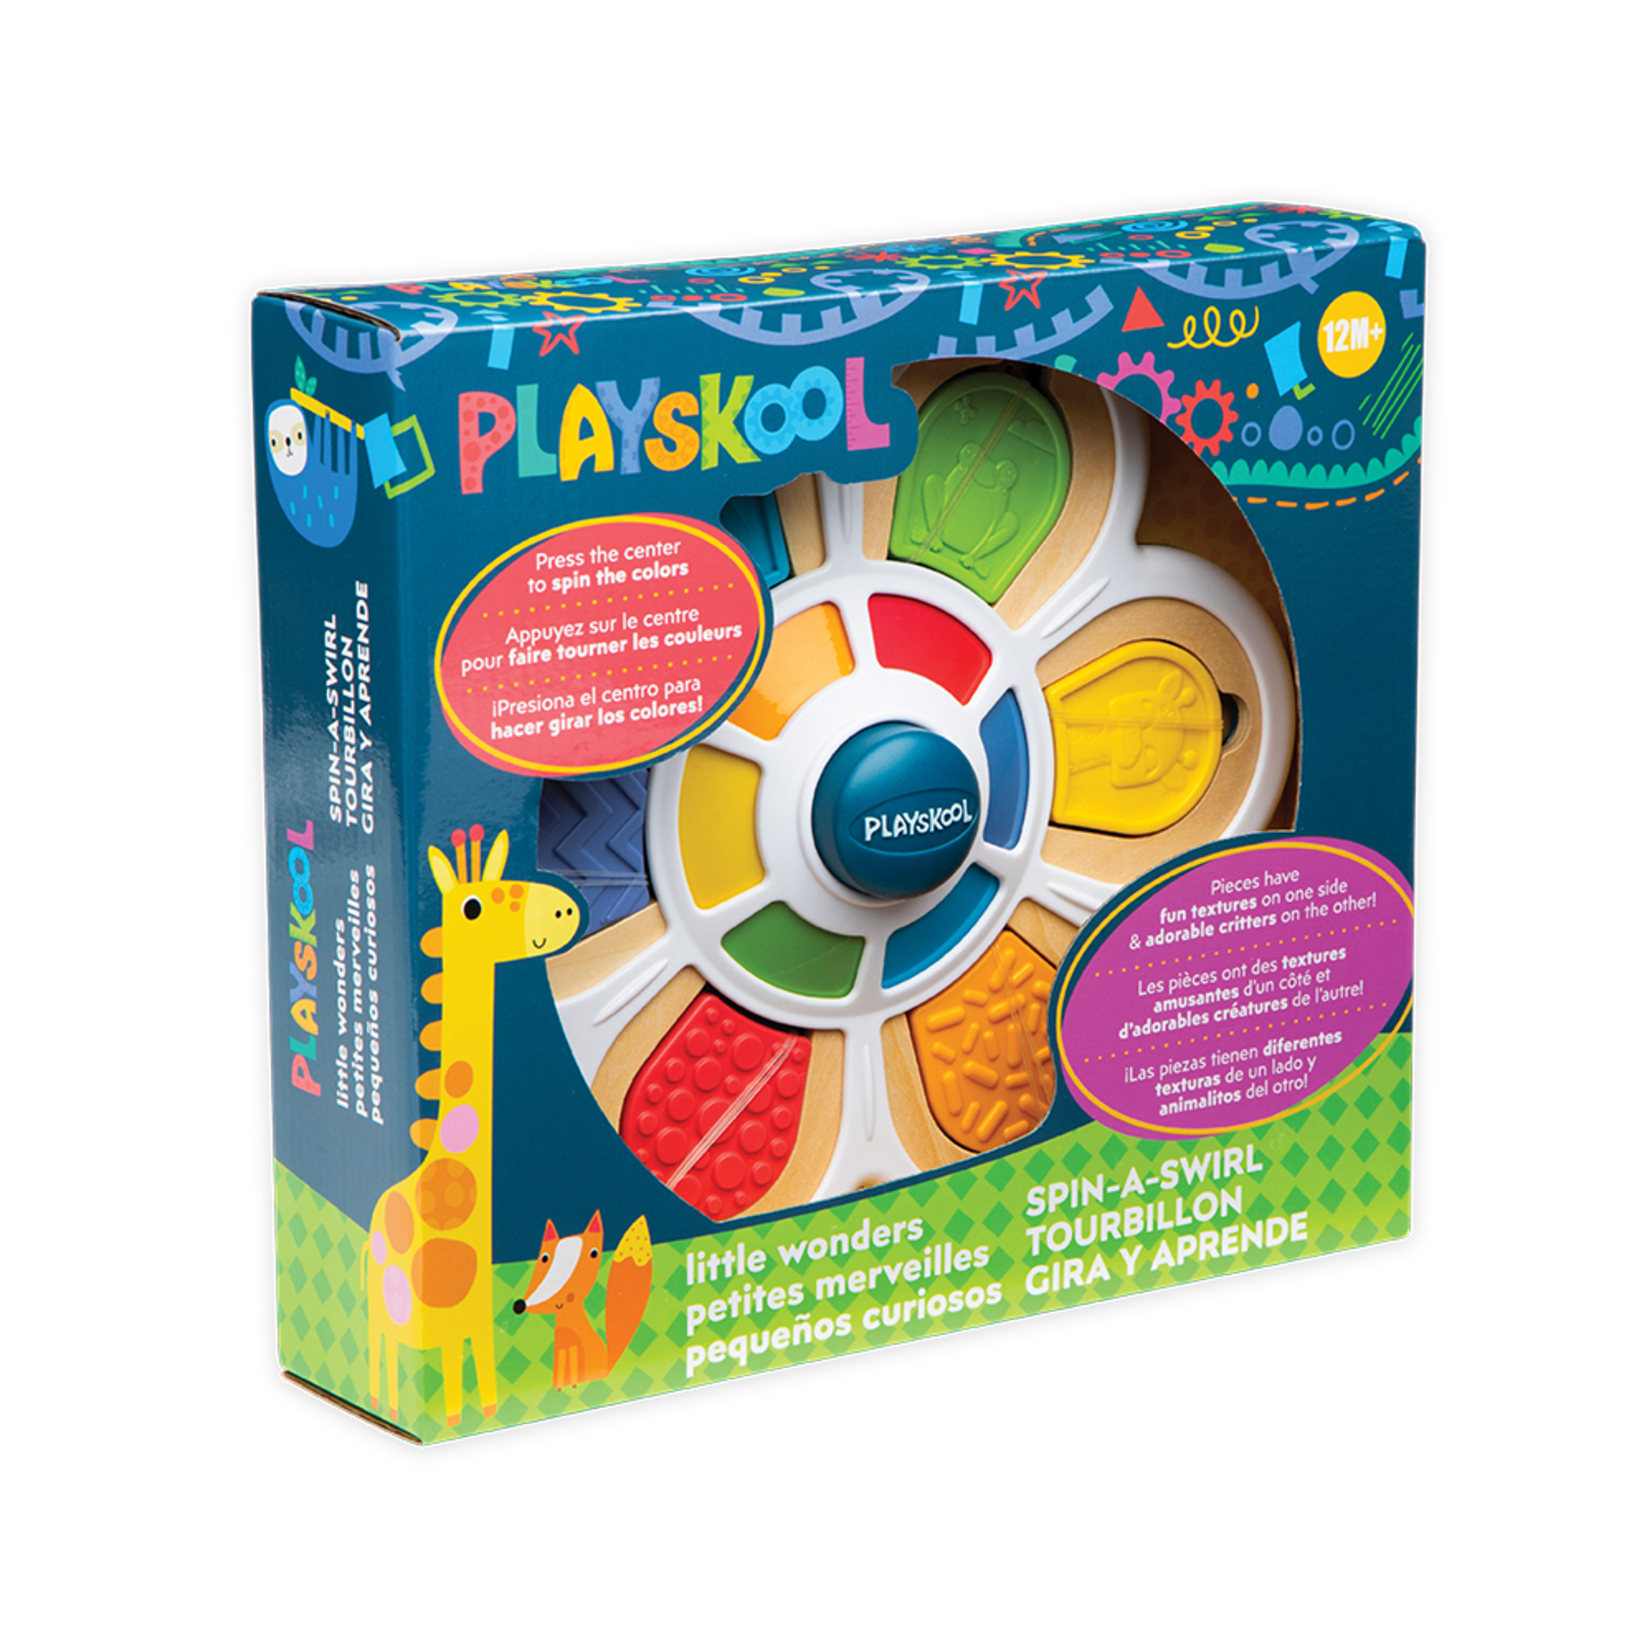 Playskool Spin-A-Swirl